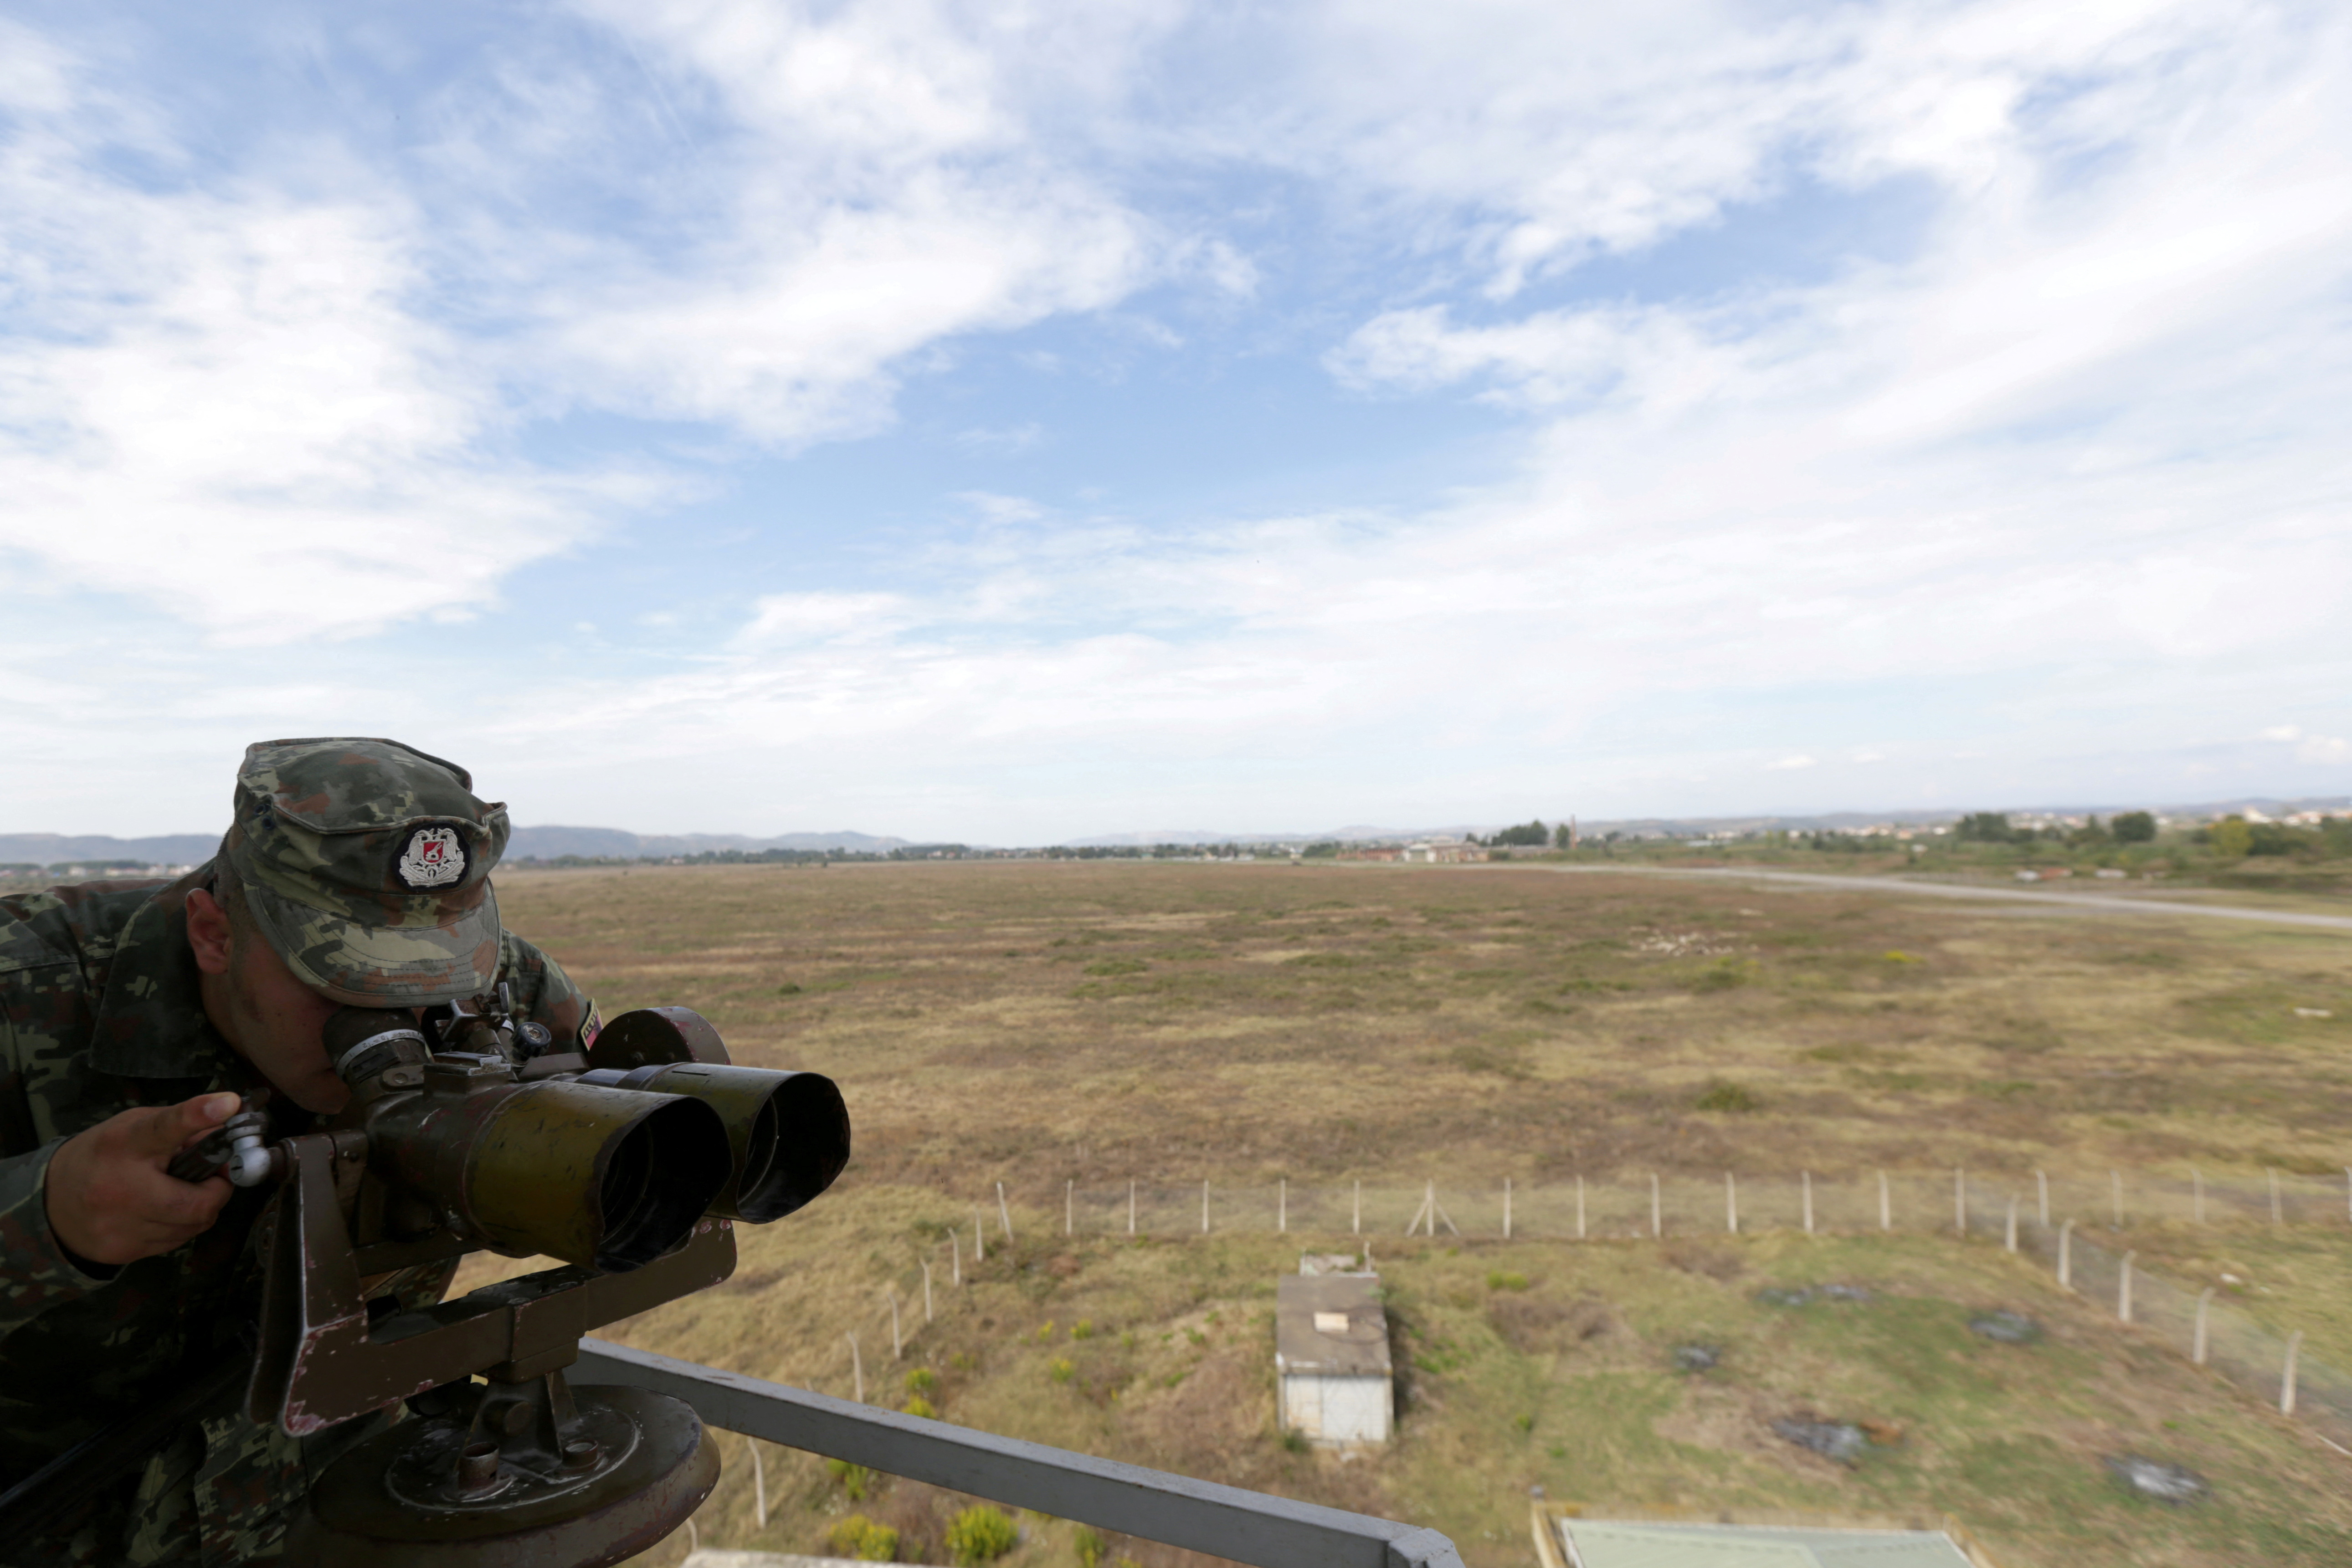 An Albanian Military Force member use uses binoculars in Kucova Air Base in Kucova